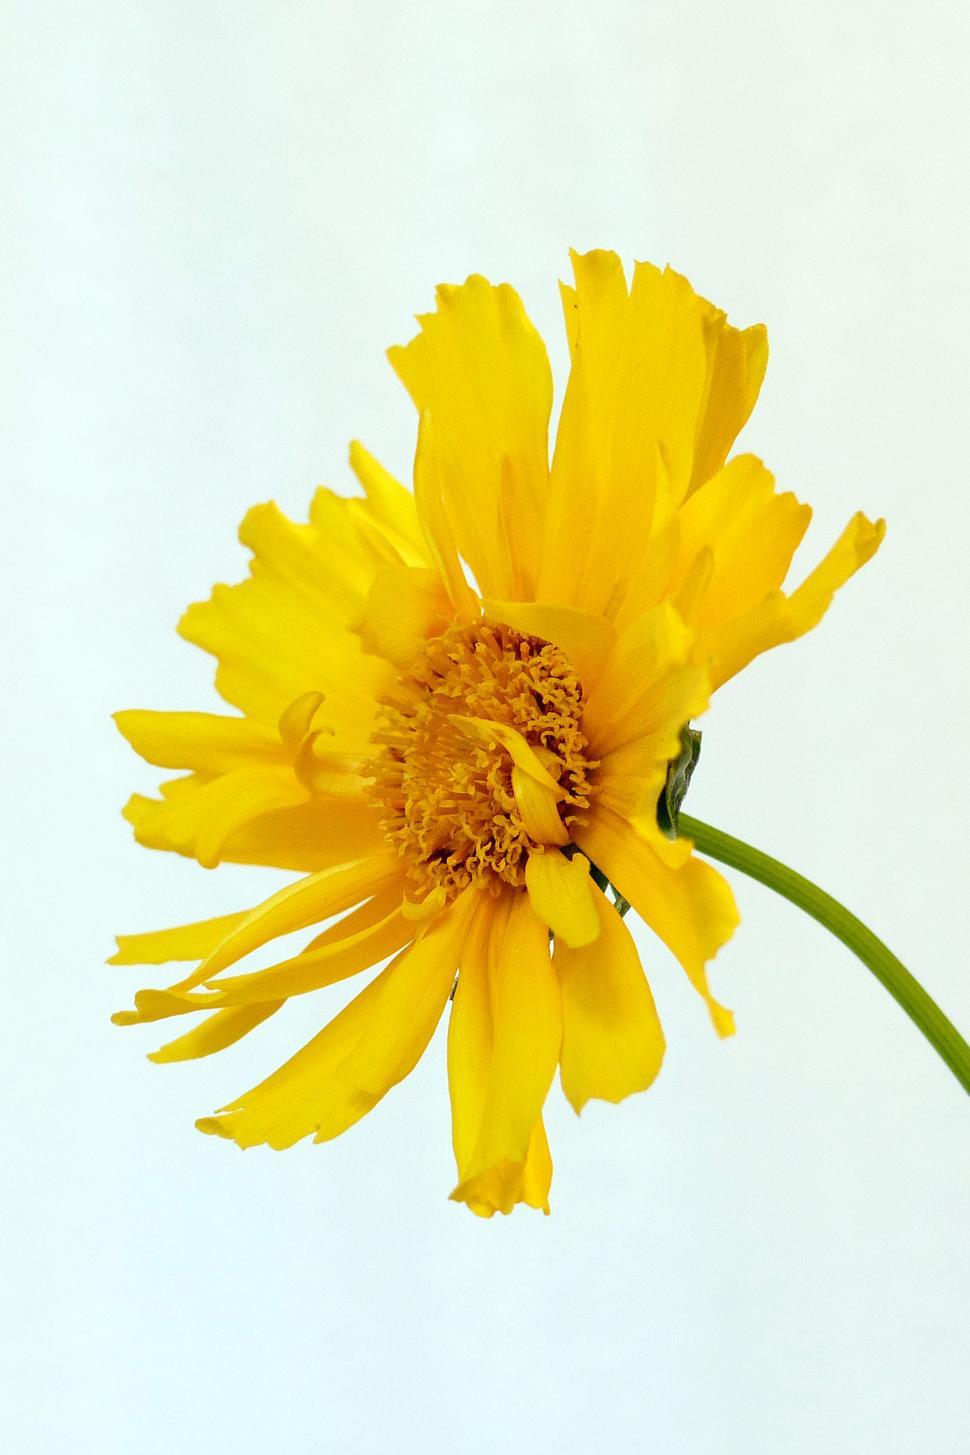 Free Image of Yellow Coreopsis Flower 